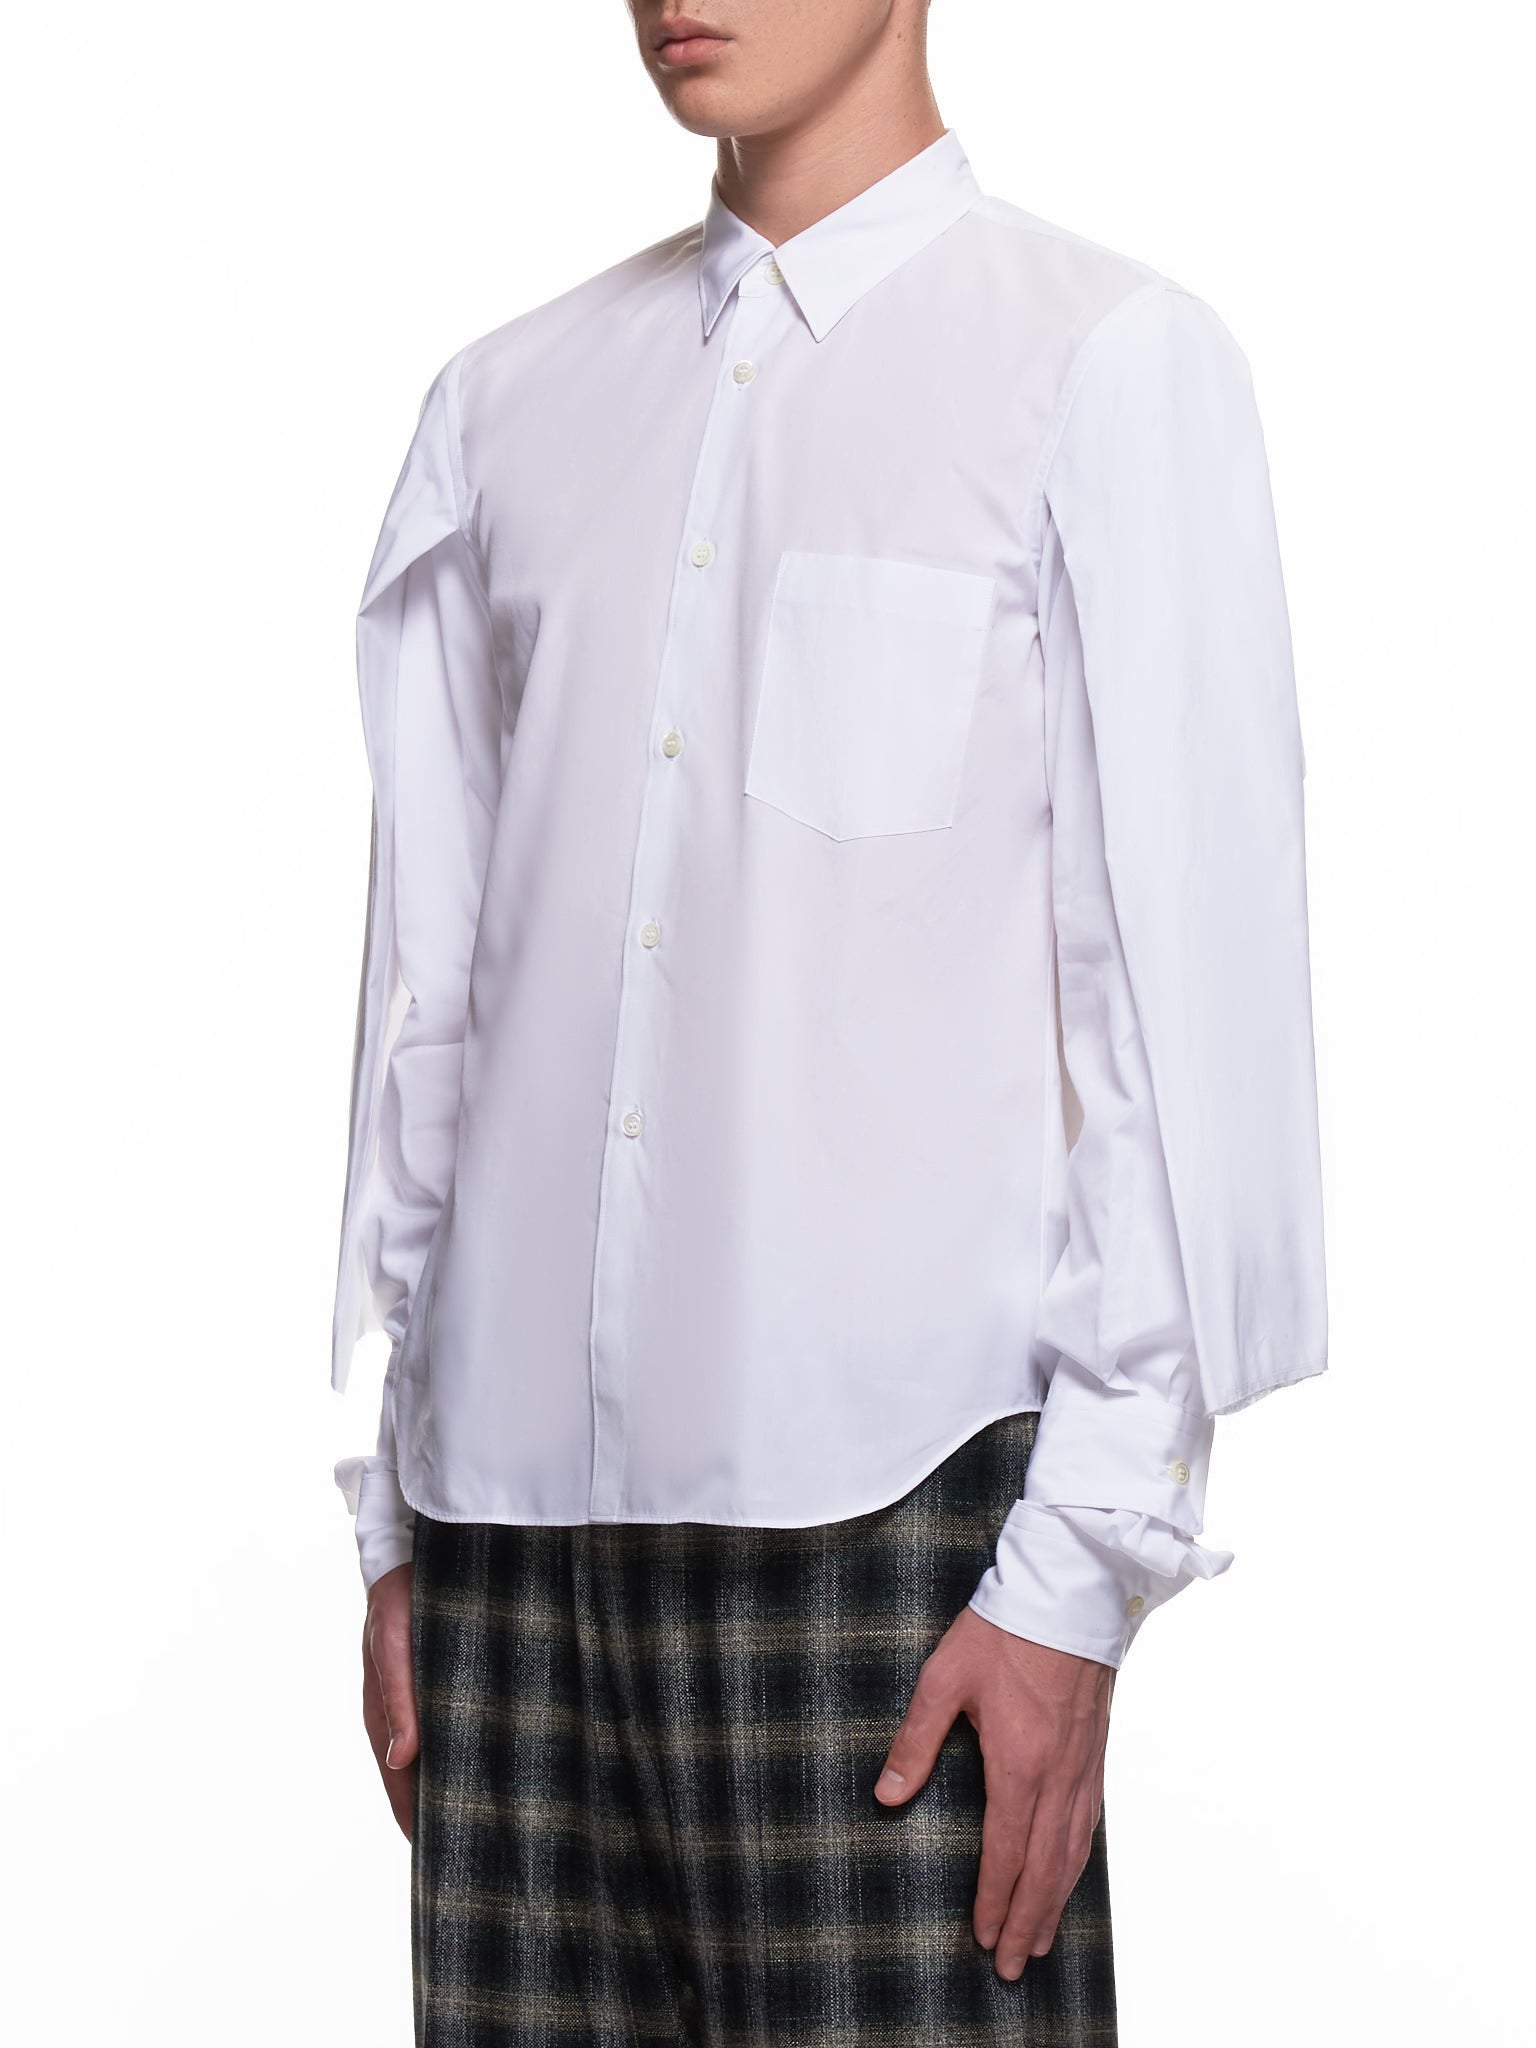 Layered (PF-B007-051-WHITE) Shirt Button-Up Sleeve